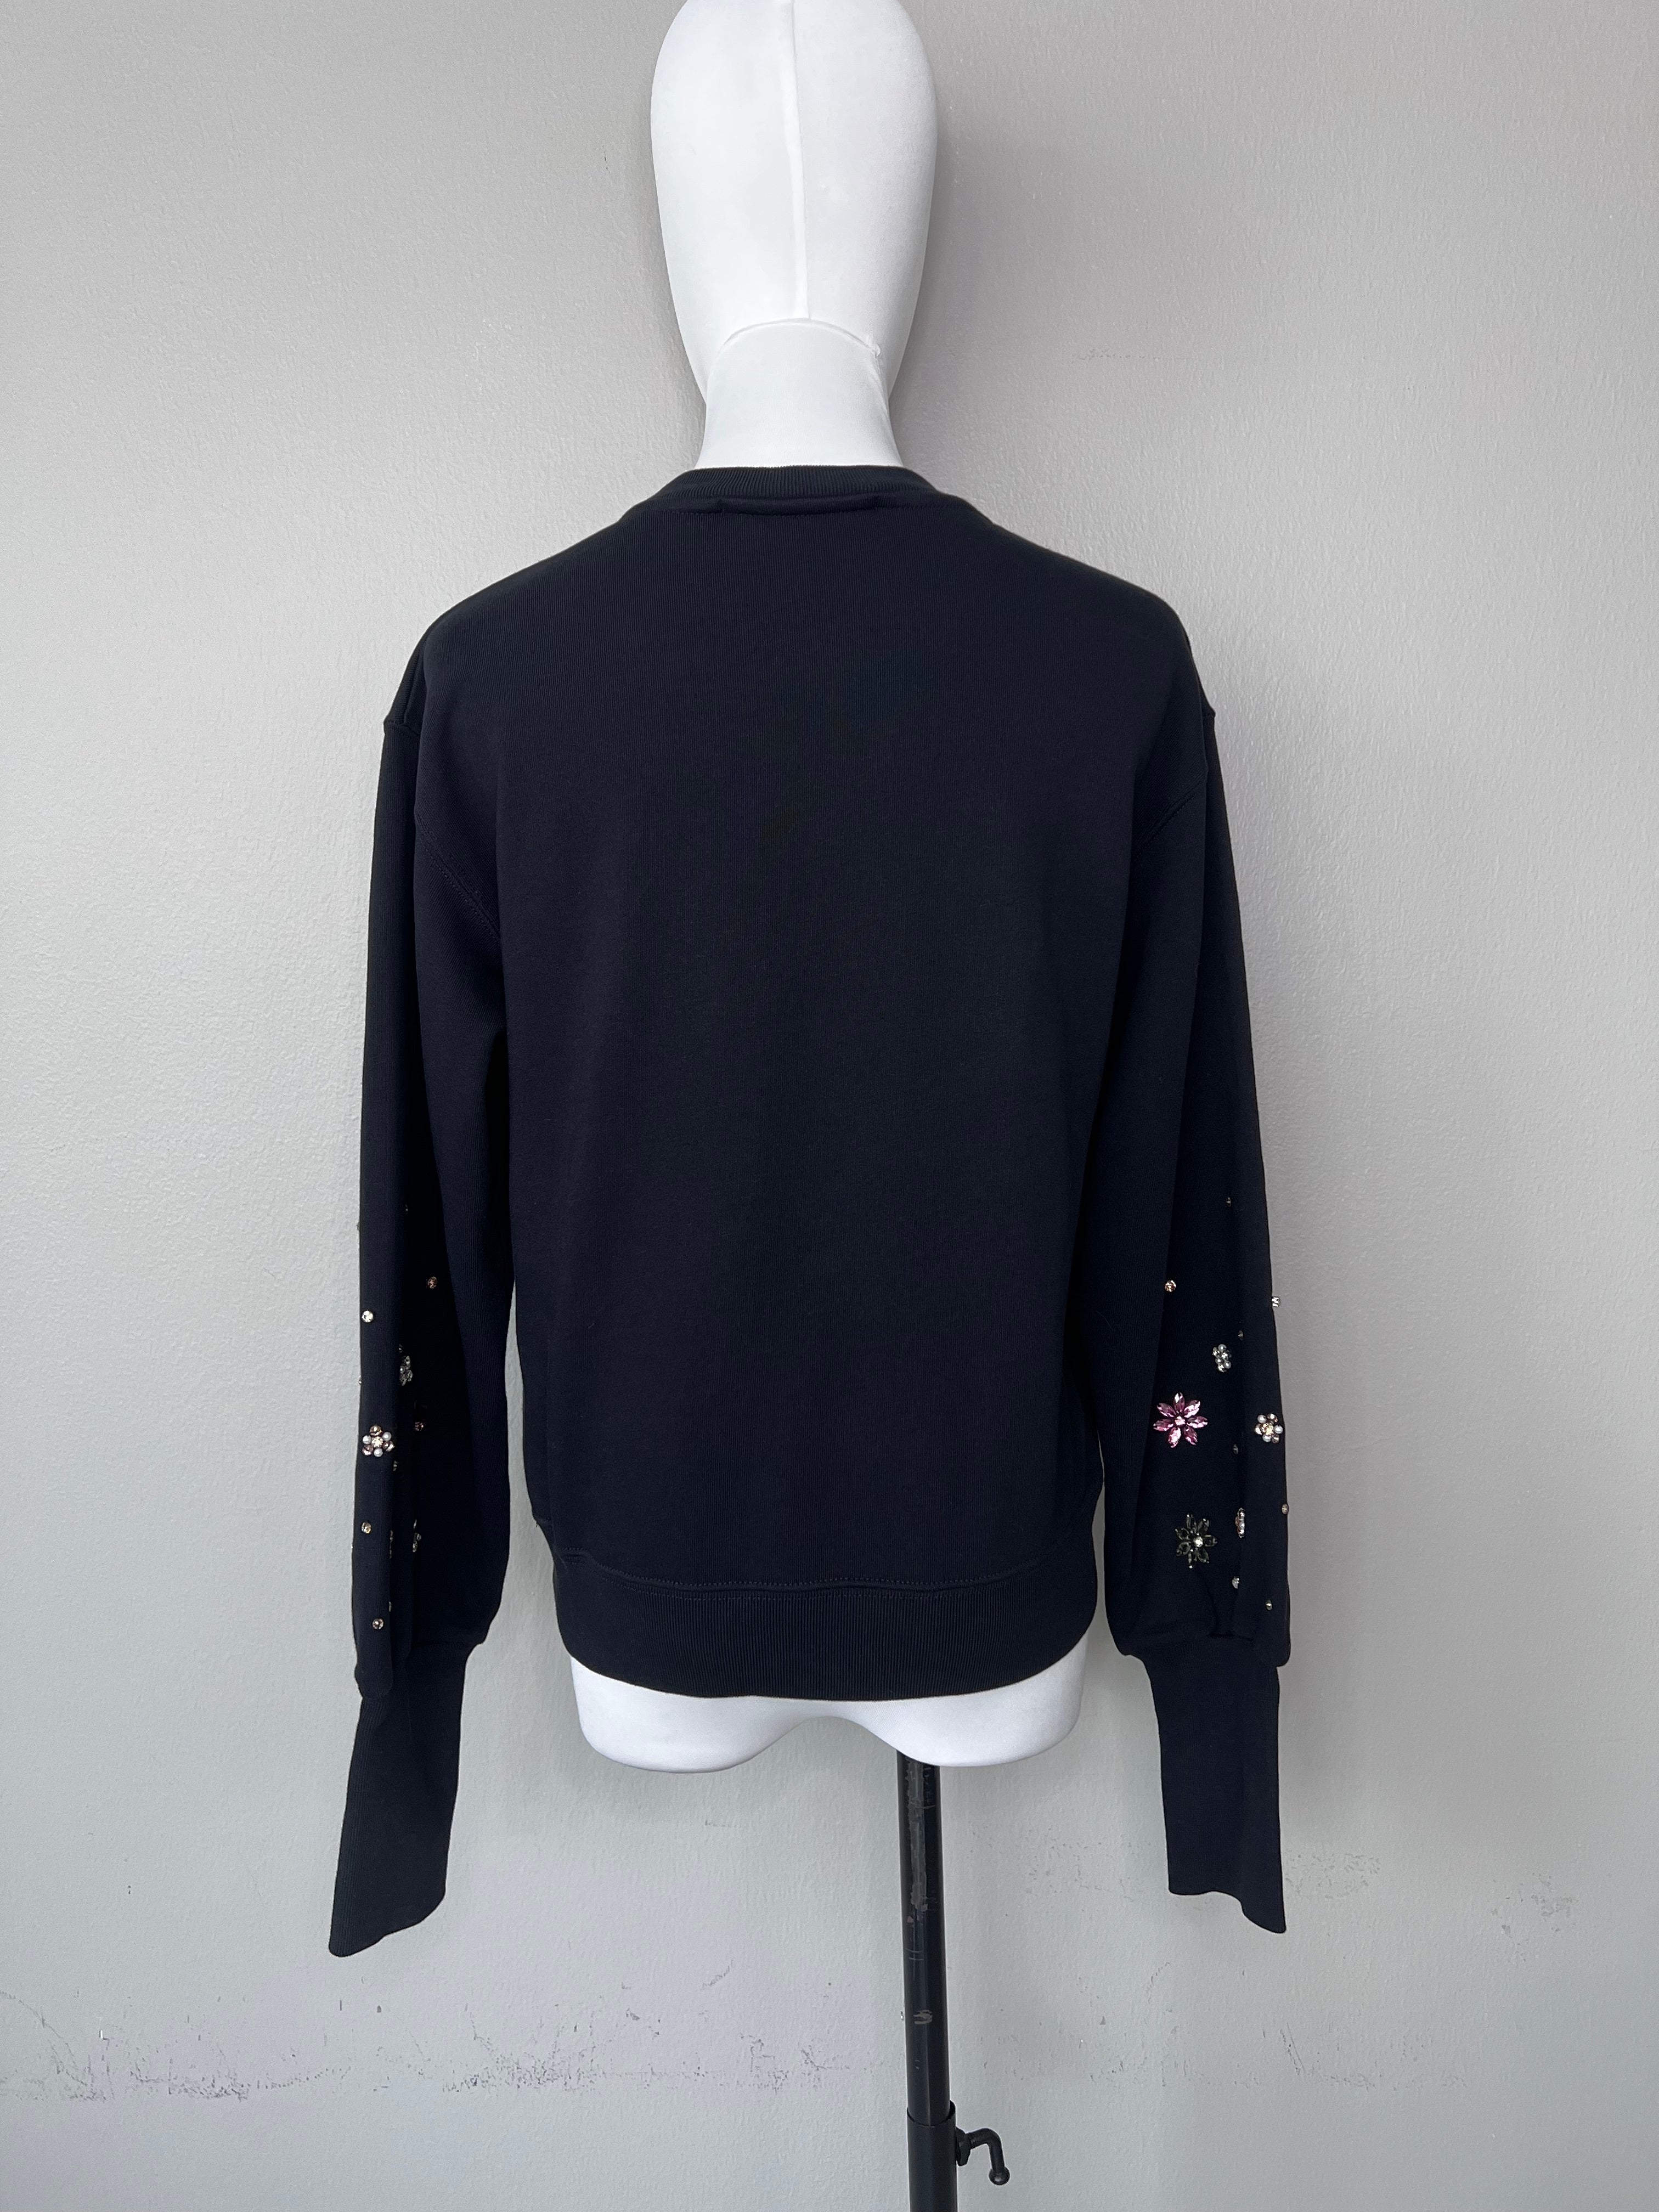 Black Floral swarovski longsleeve sweater - MSGM